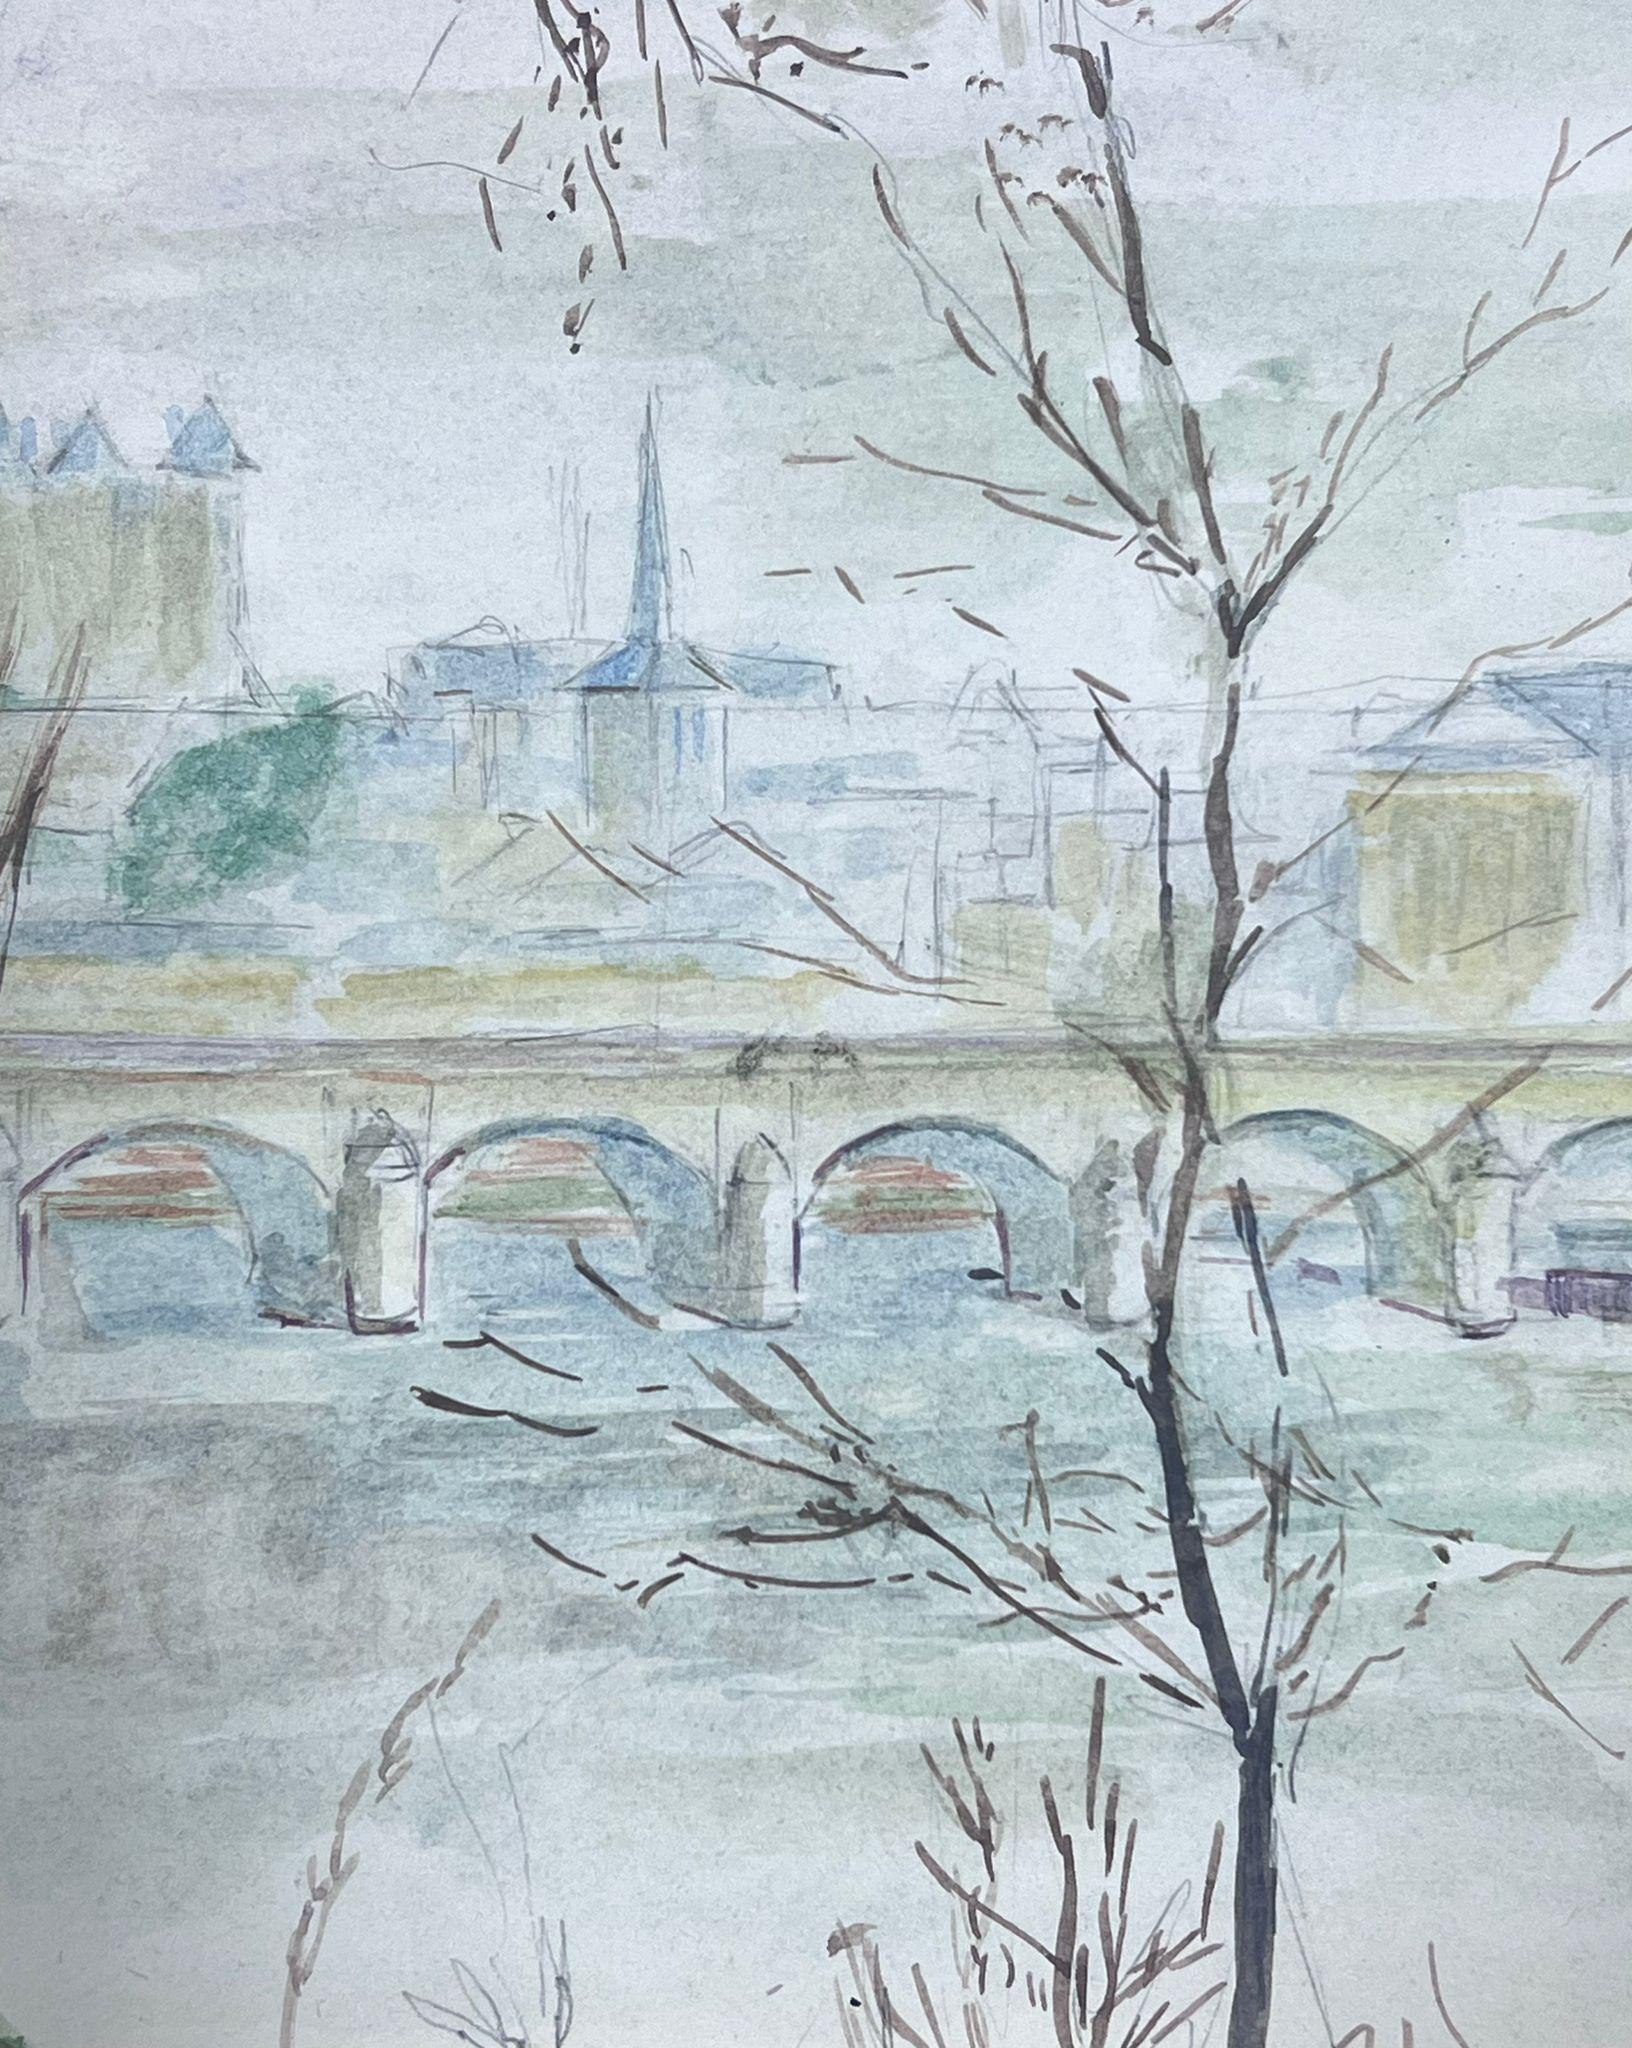 20th Century French Post Impressionist Watercolor View over French City River - Post-Impressionist Art by Guy Nicod